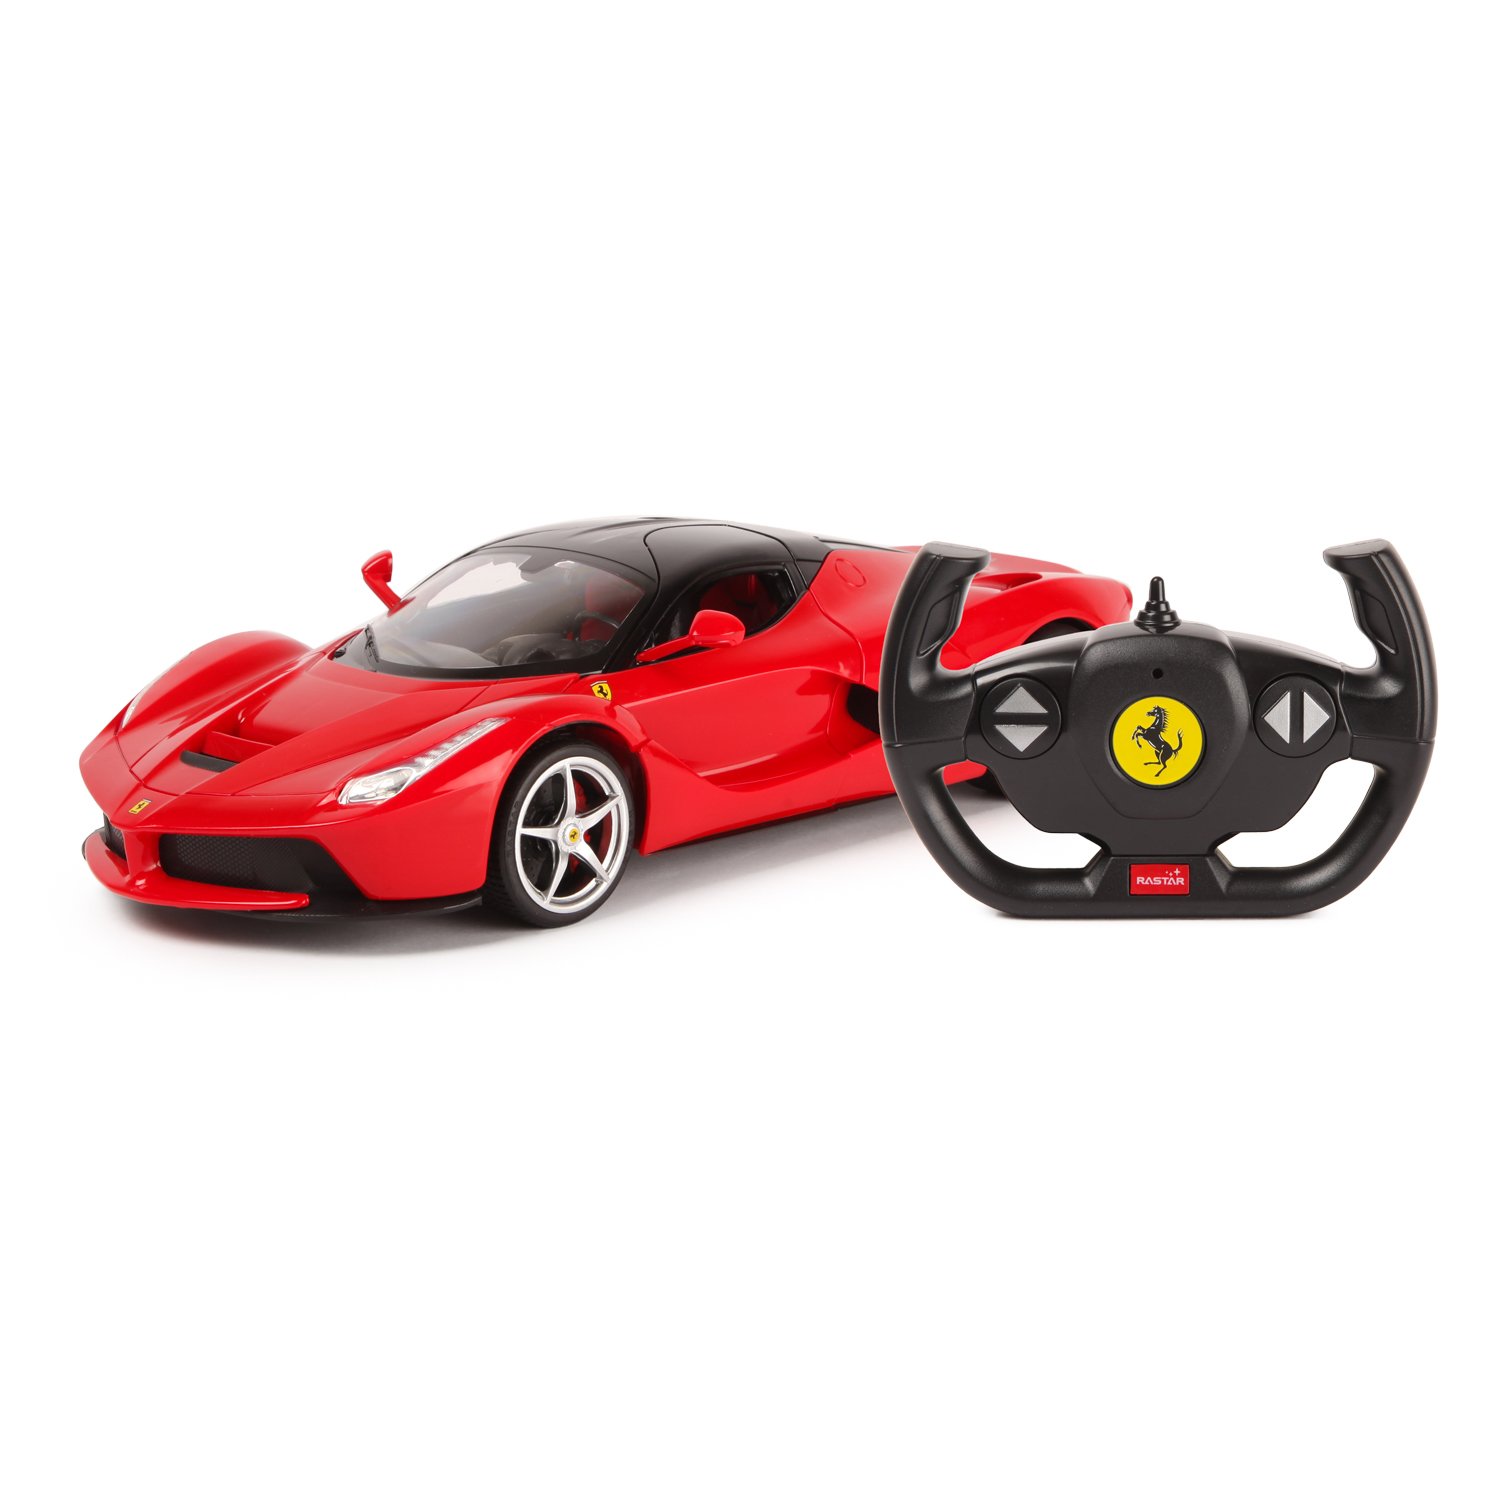 Машина Rastar РУ 1:14 Ferrari USB Красная 50160